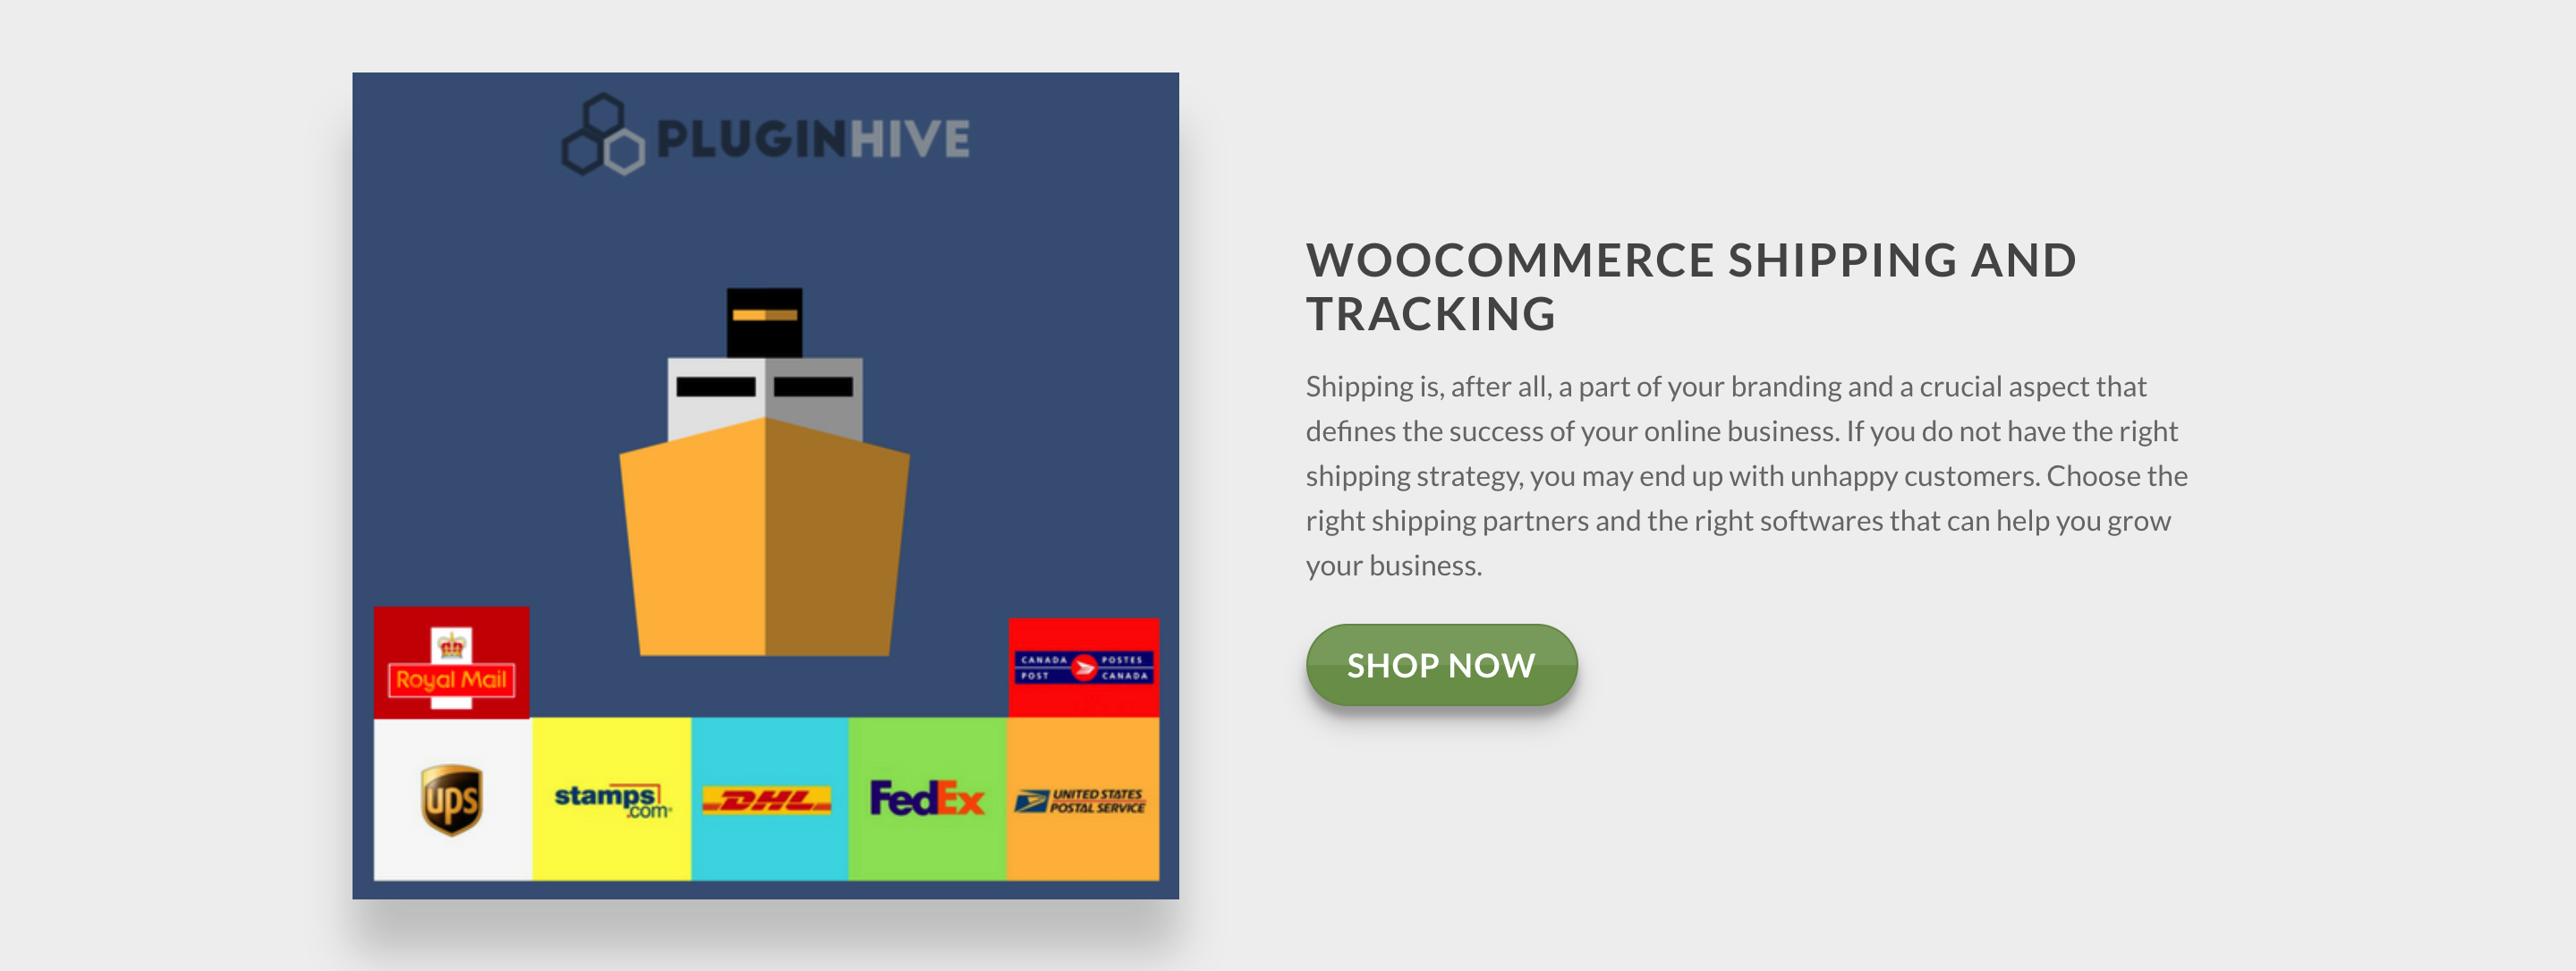 woocommerce_shipping